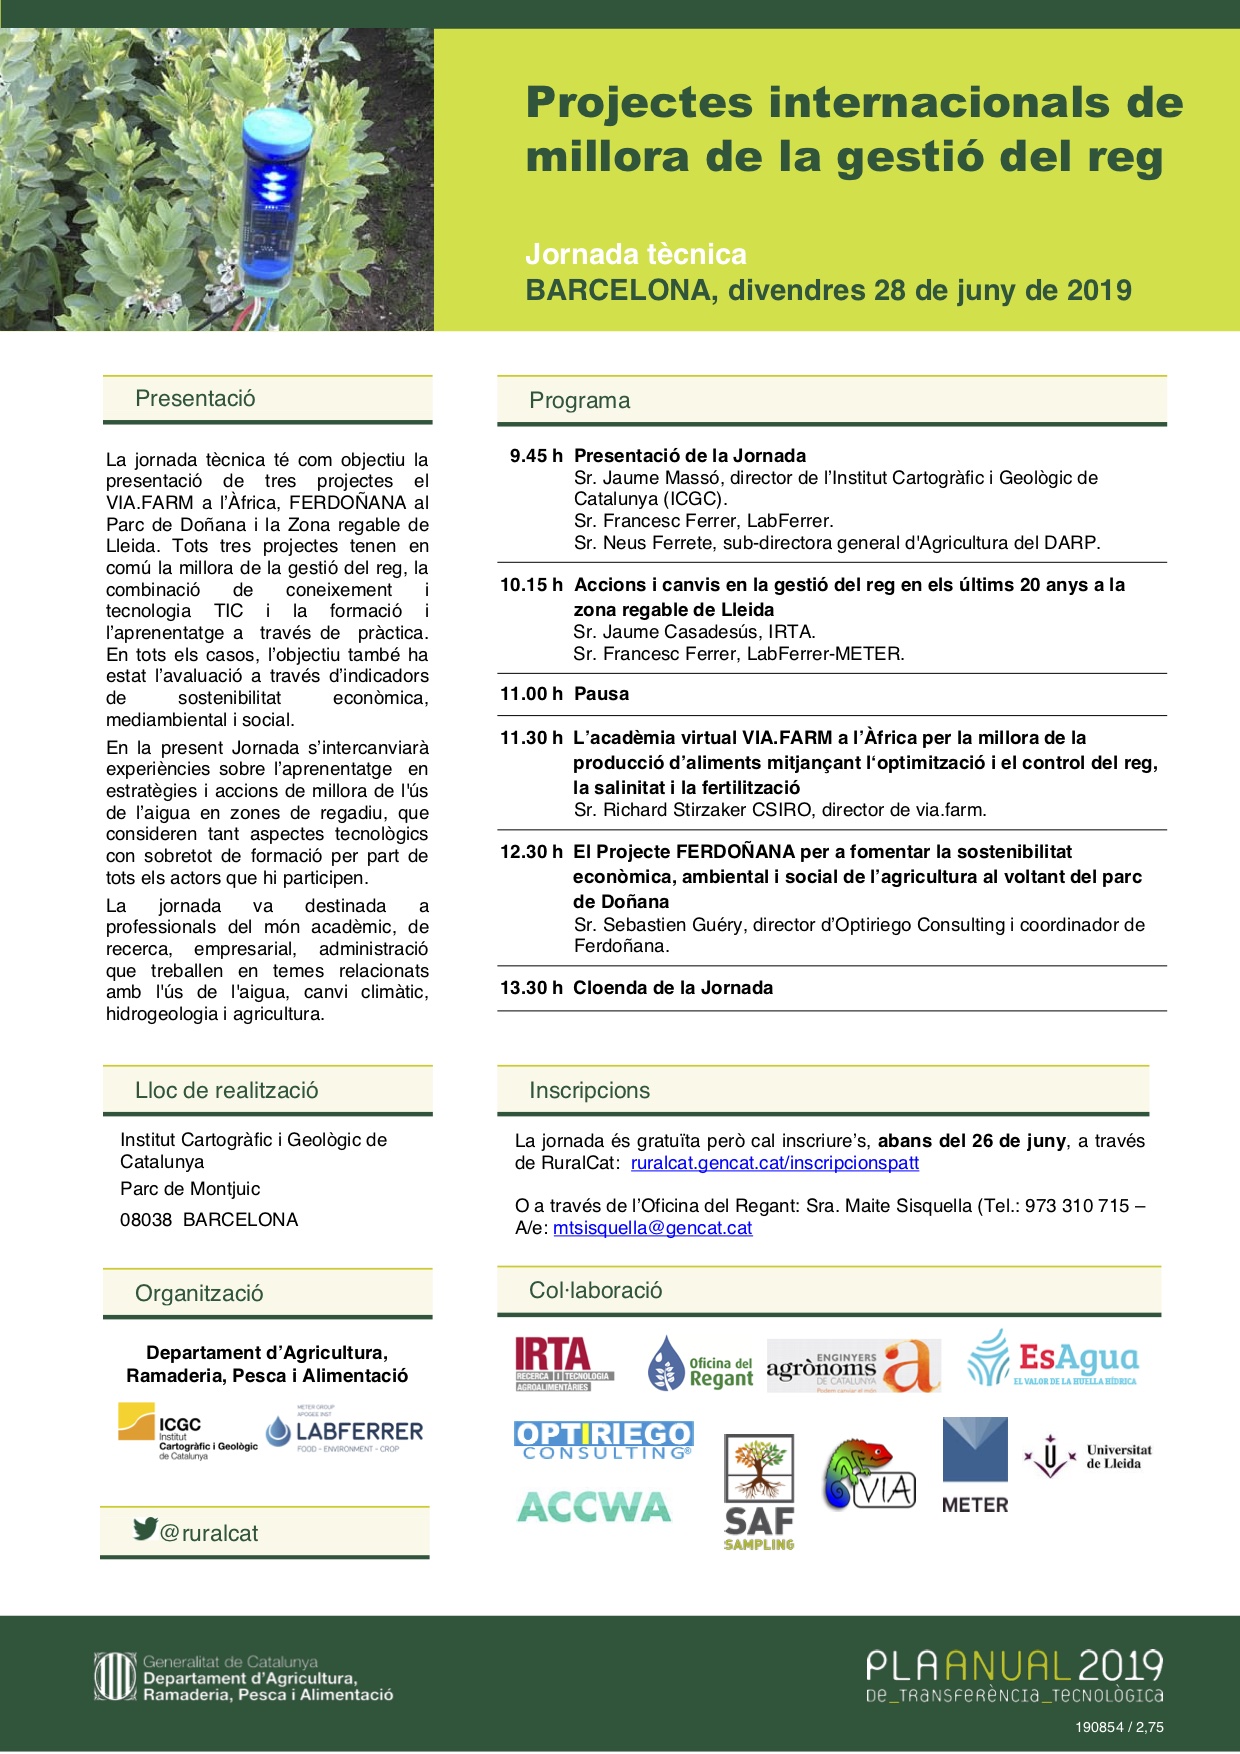 Workshop on  "International projects to improve irrigation management"